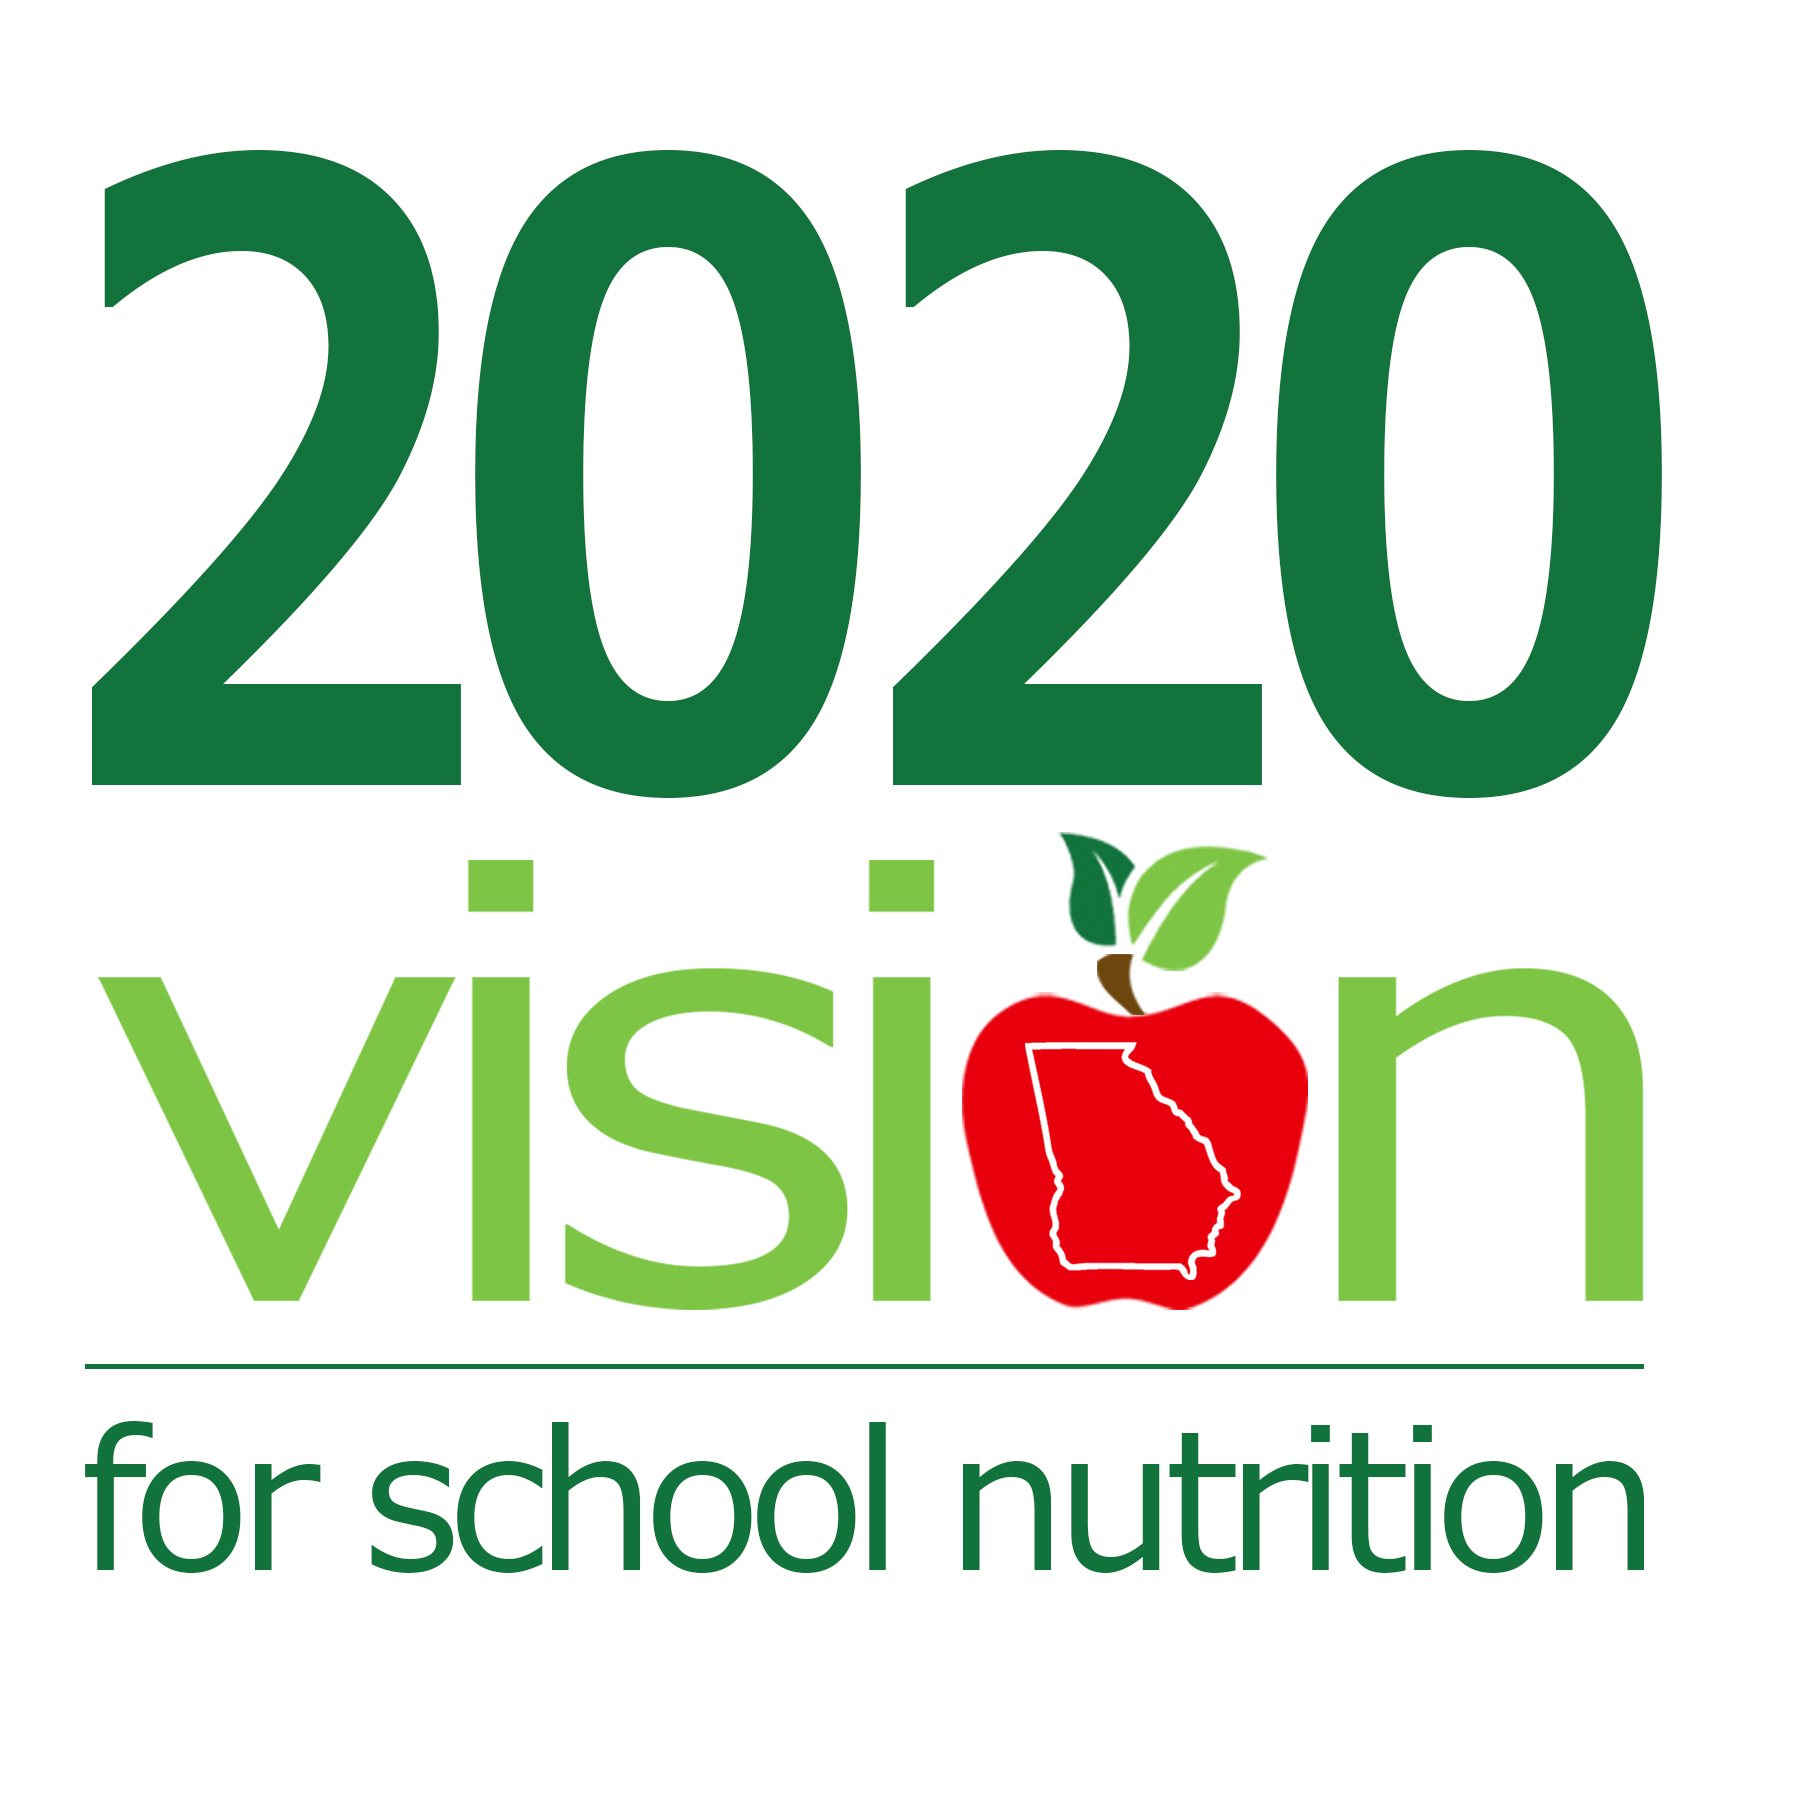 Fulton County School Nutrition 2020 vision for School Nutrition